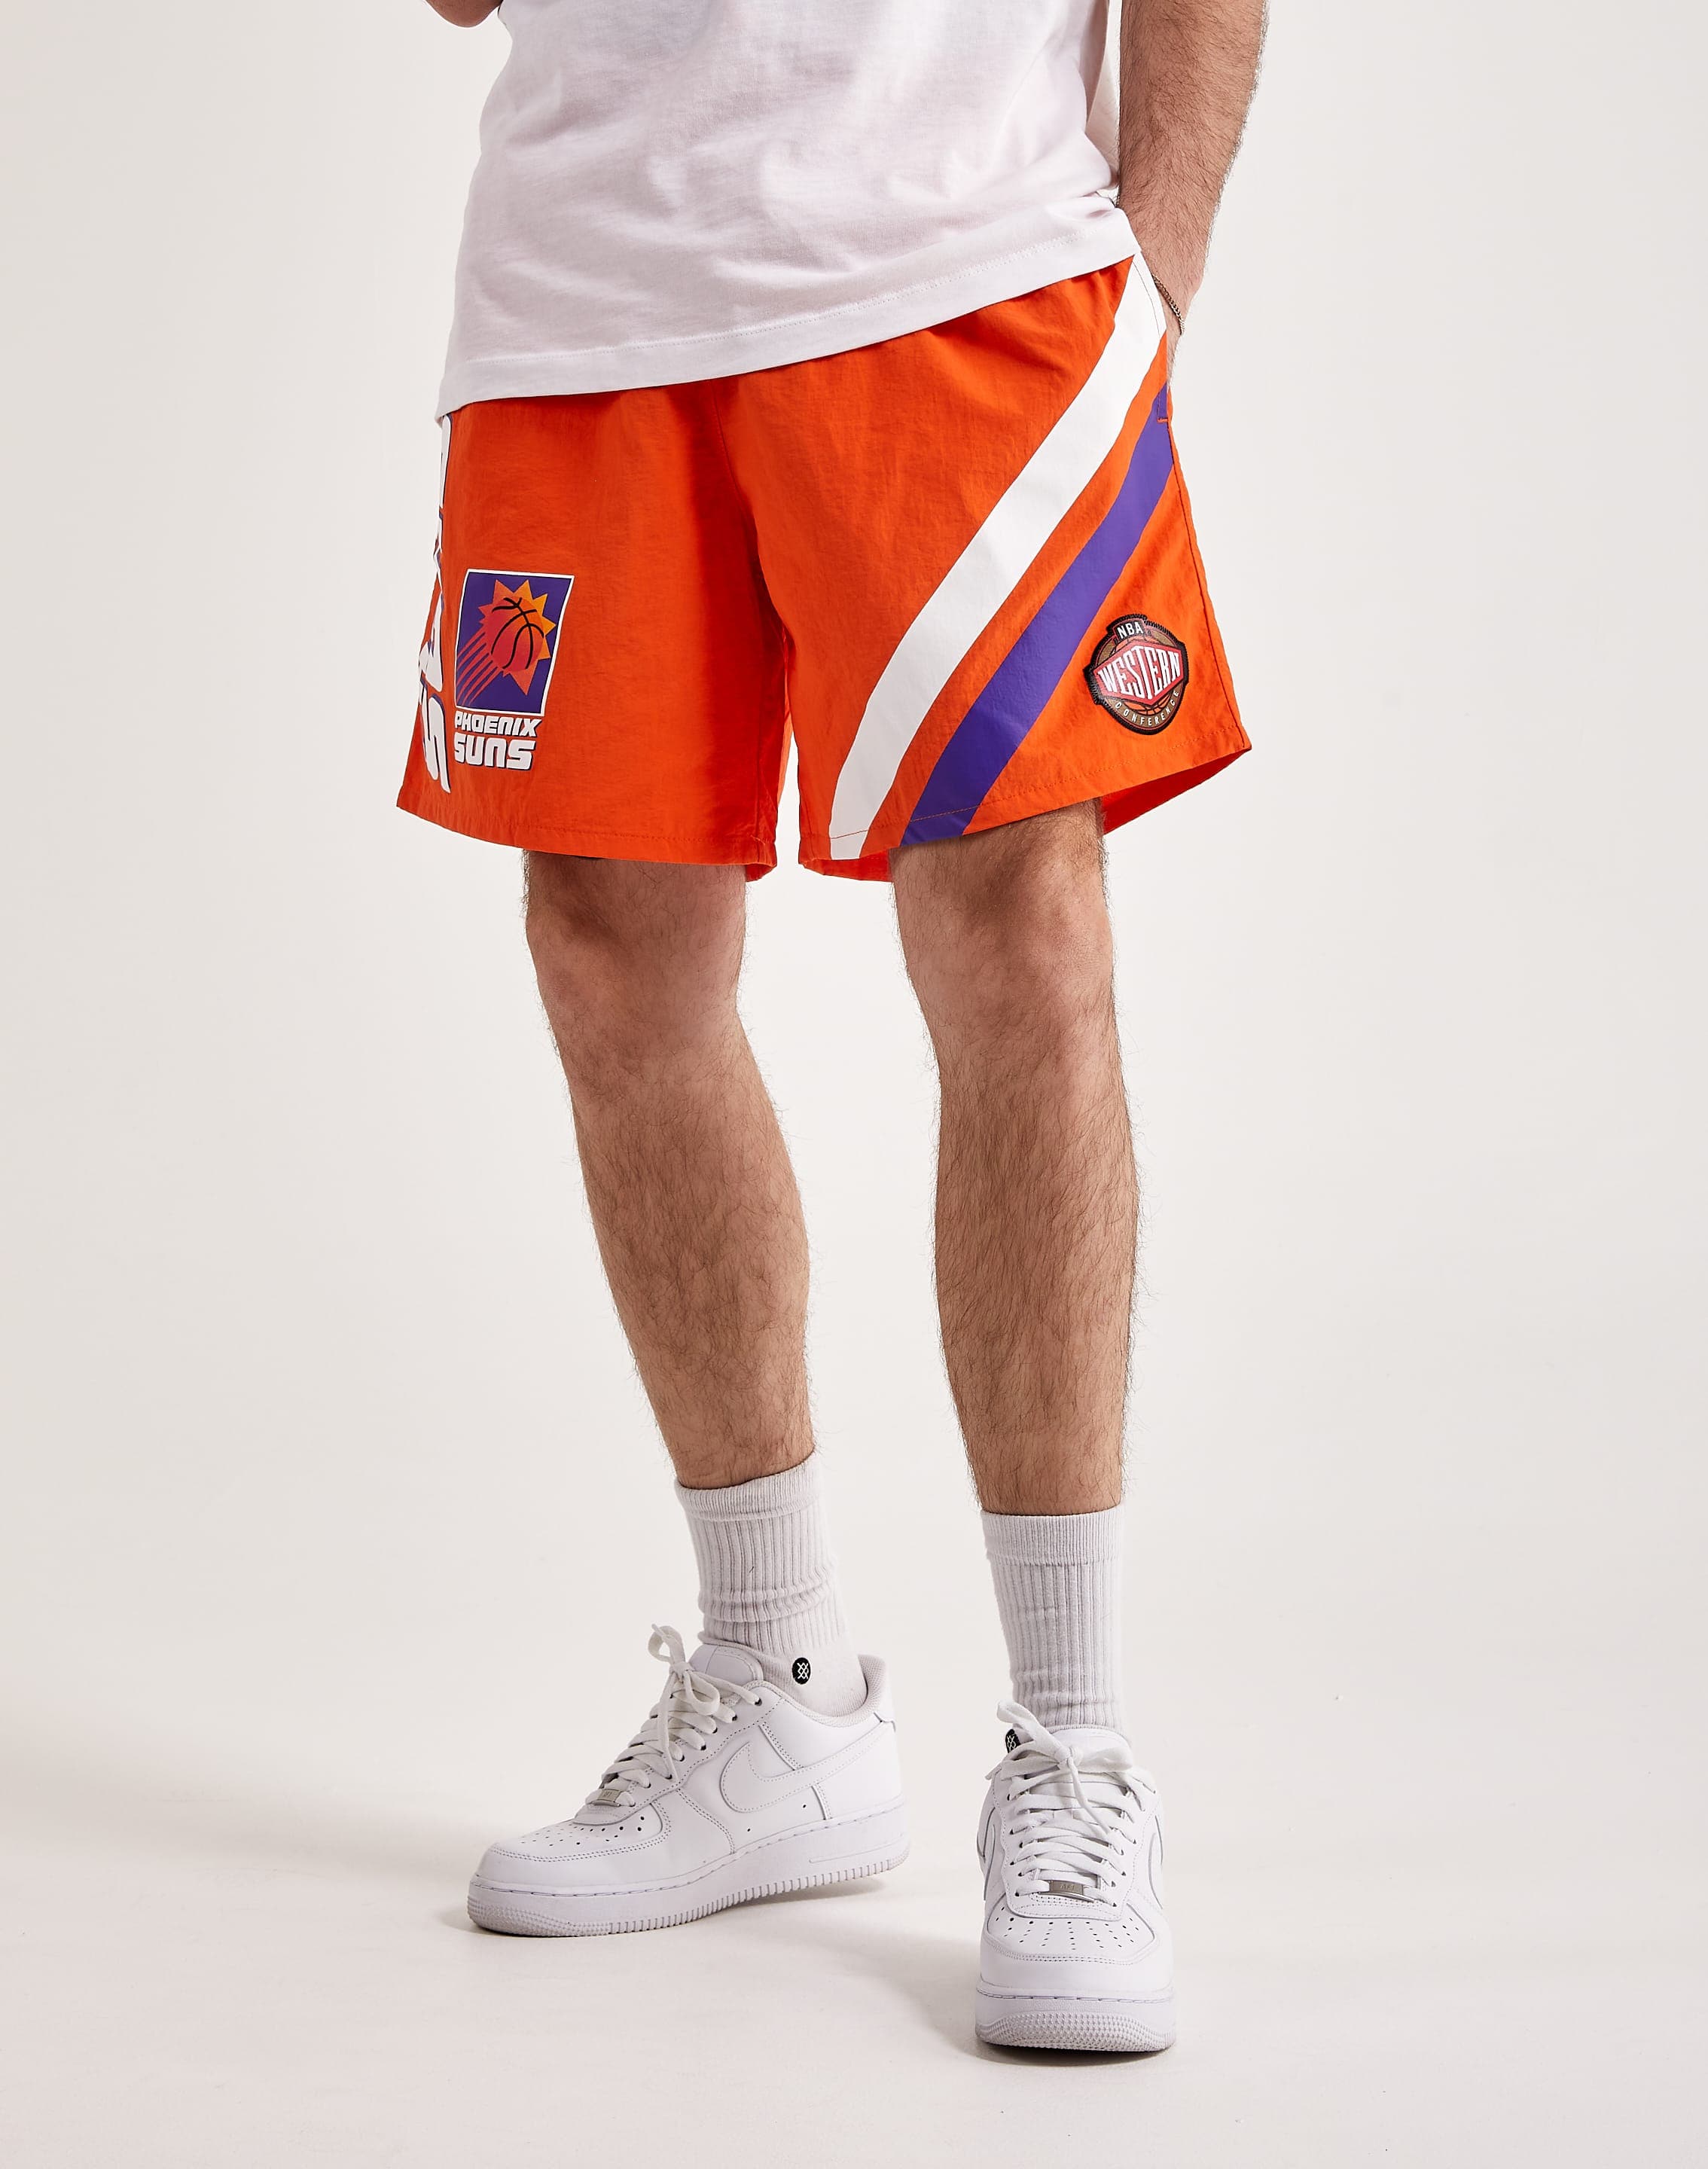 Phoenix Suns Shorts, Suns Basketball Shorts, Running Shorts